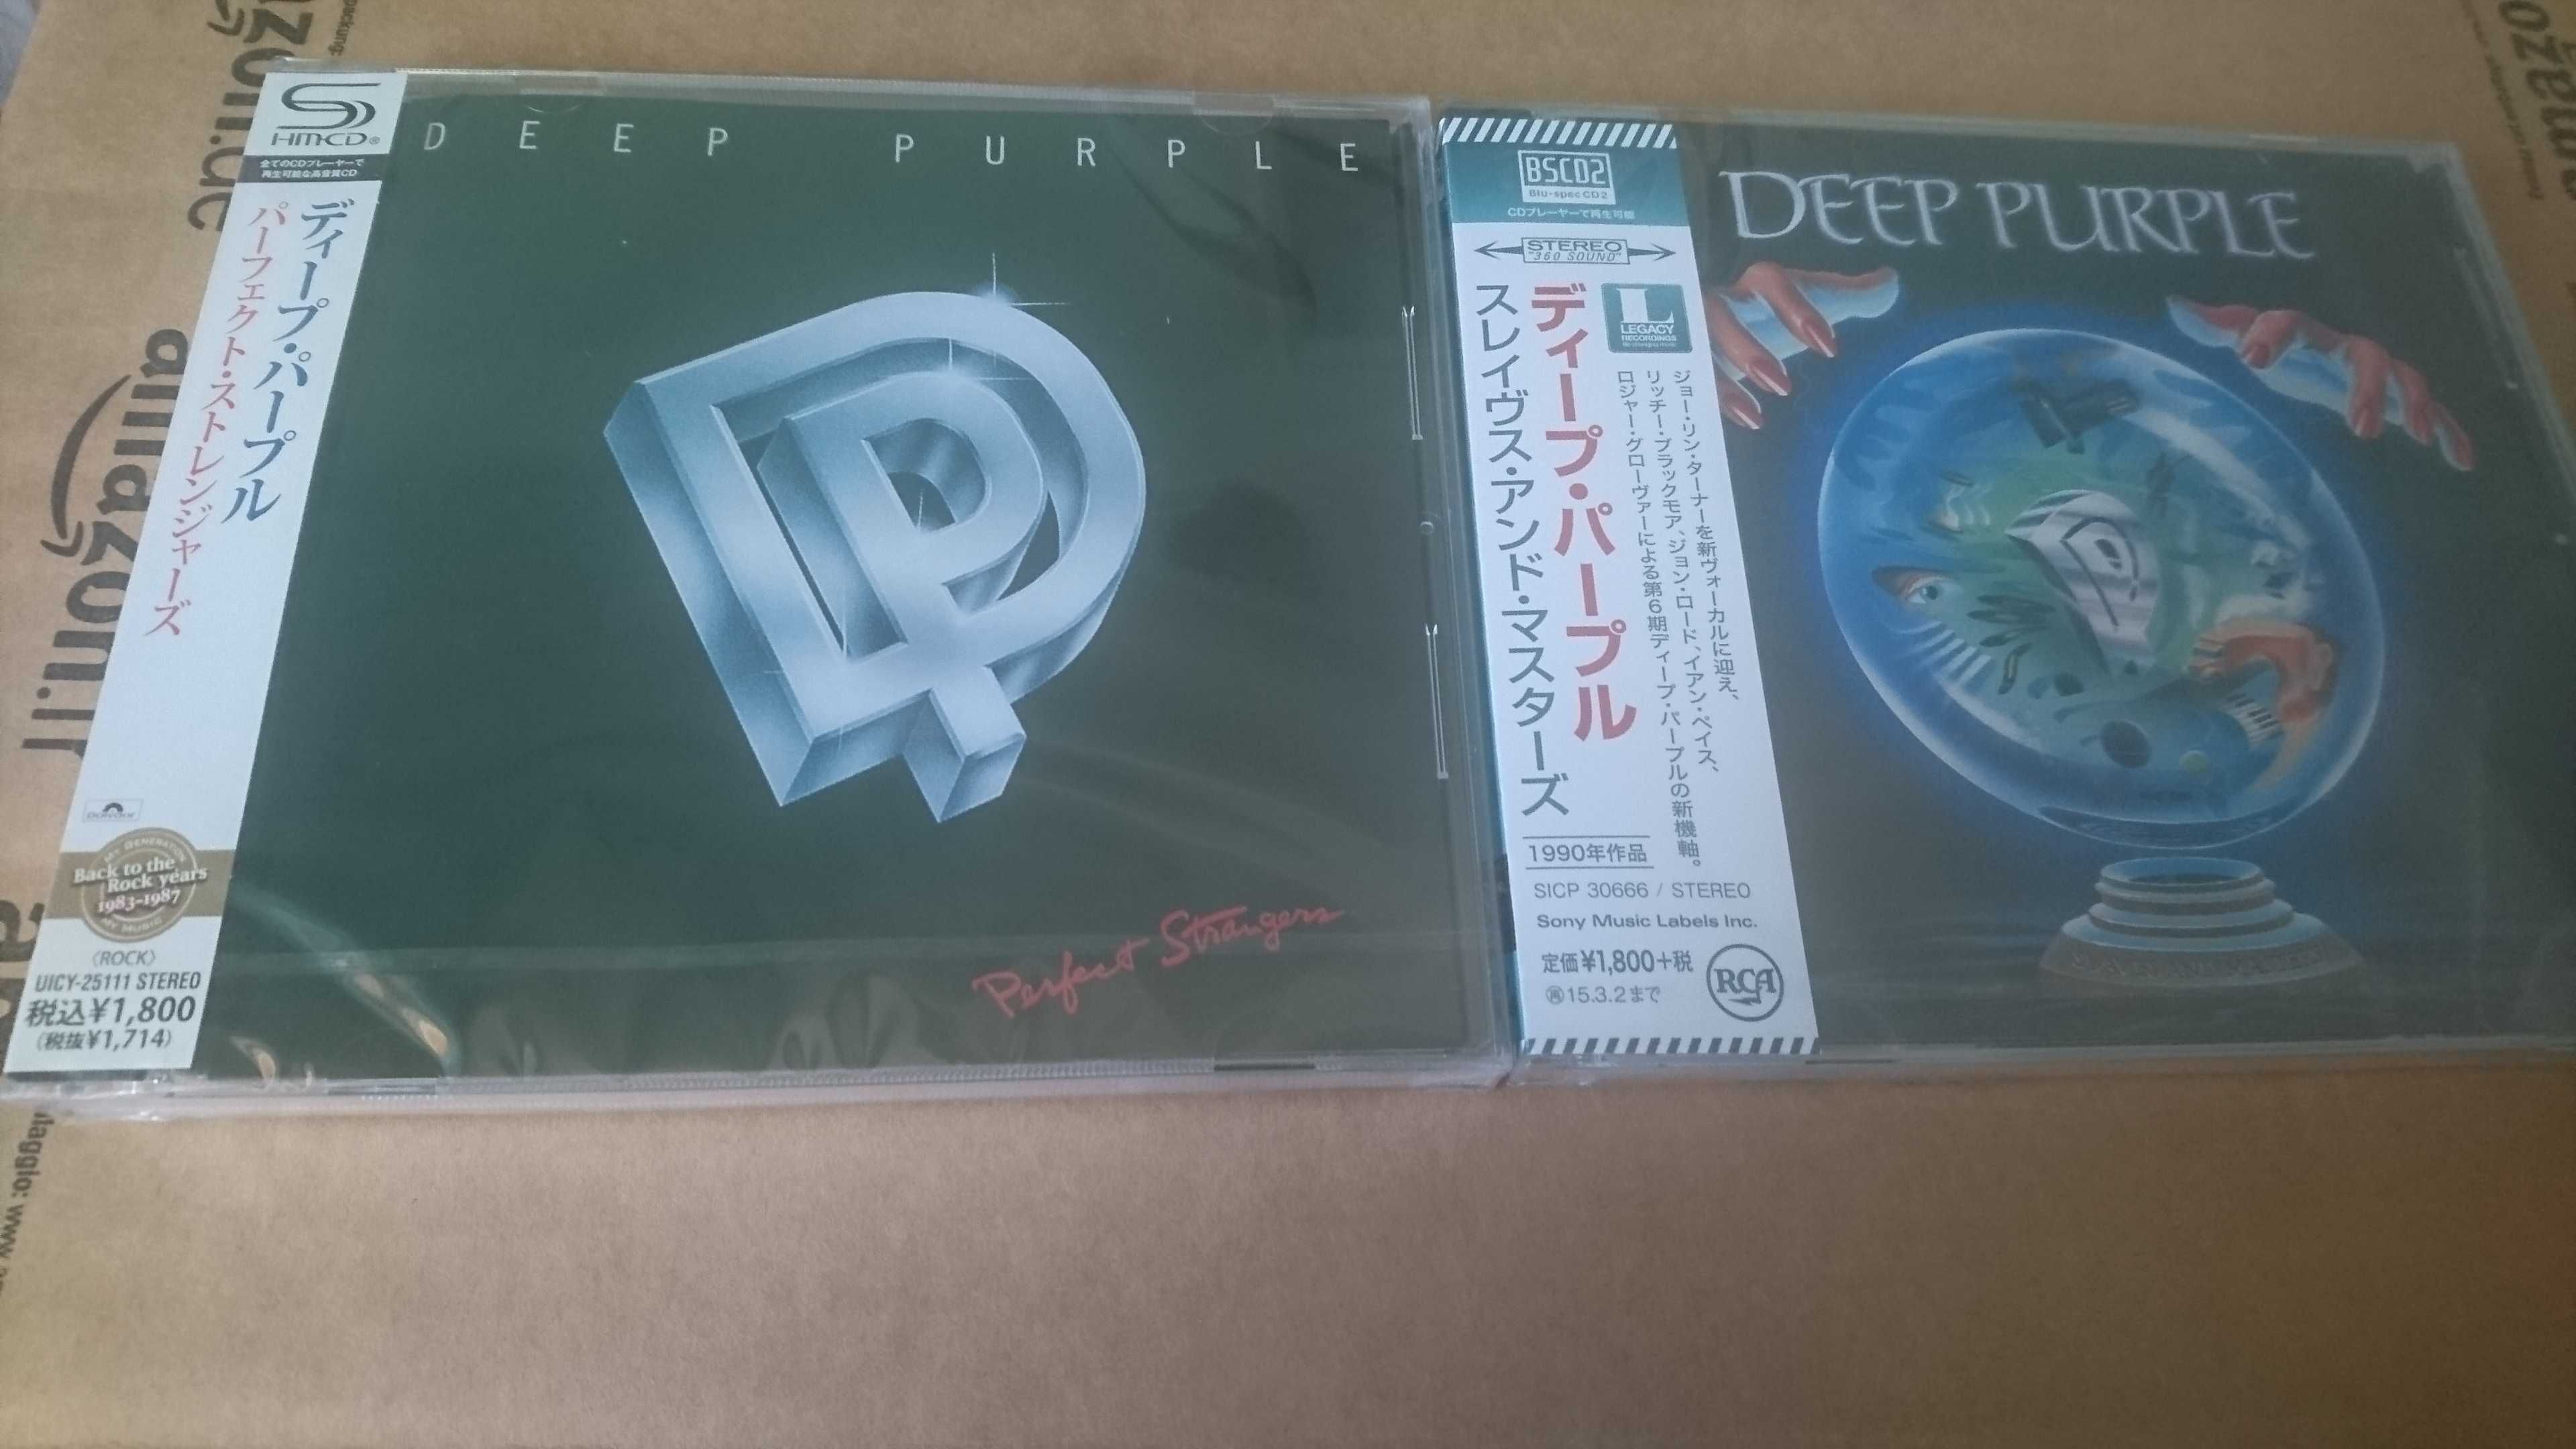 Japan CD: Doji Morita, Camel, Chris Rea, Bee Gees, Rainbow Deep Purple